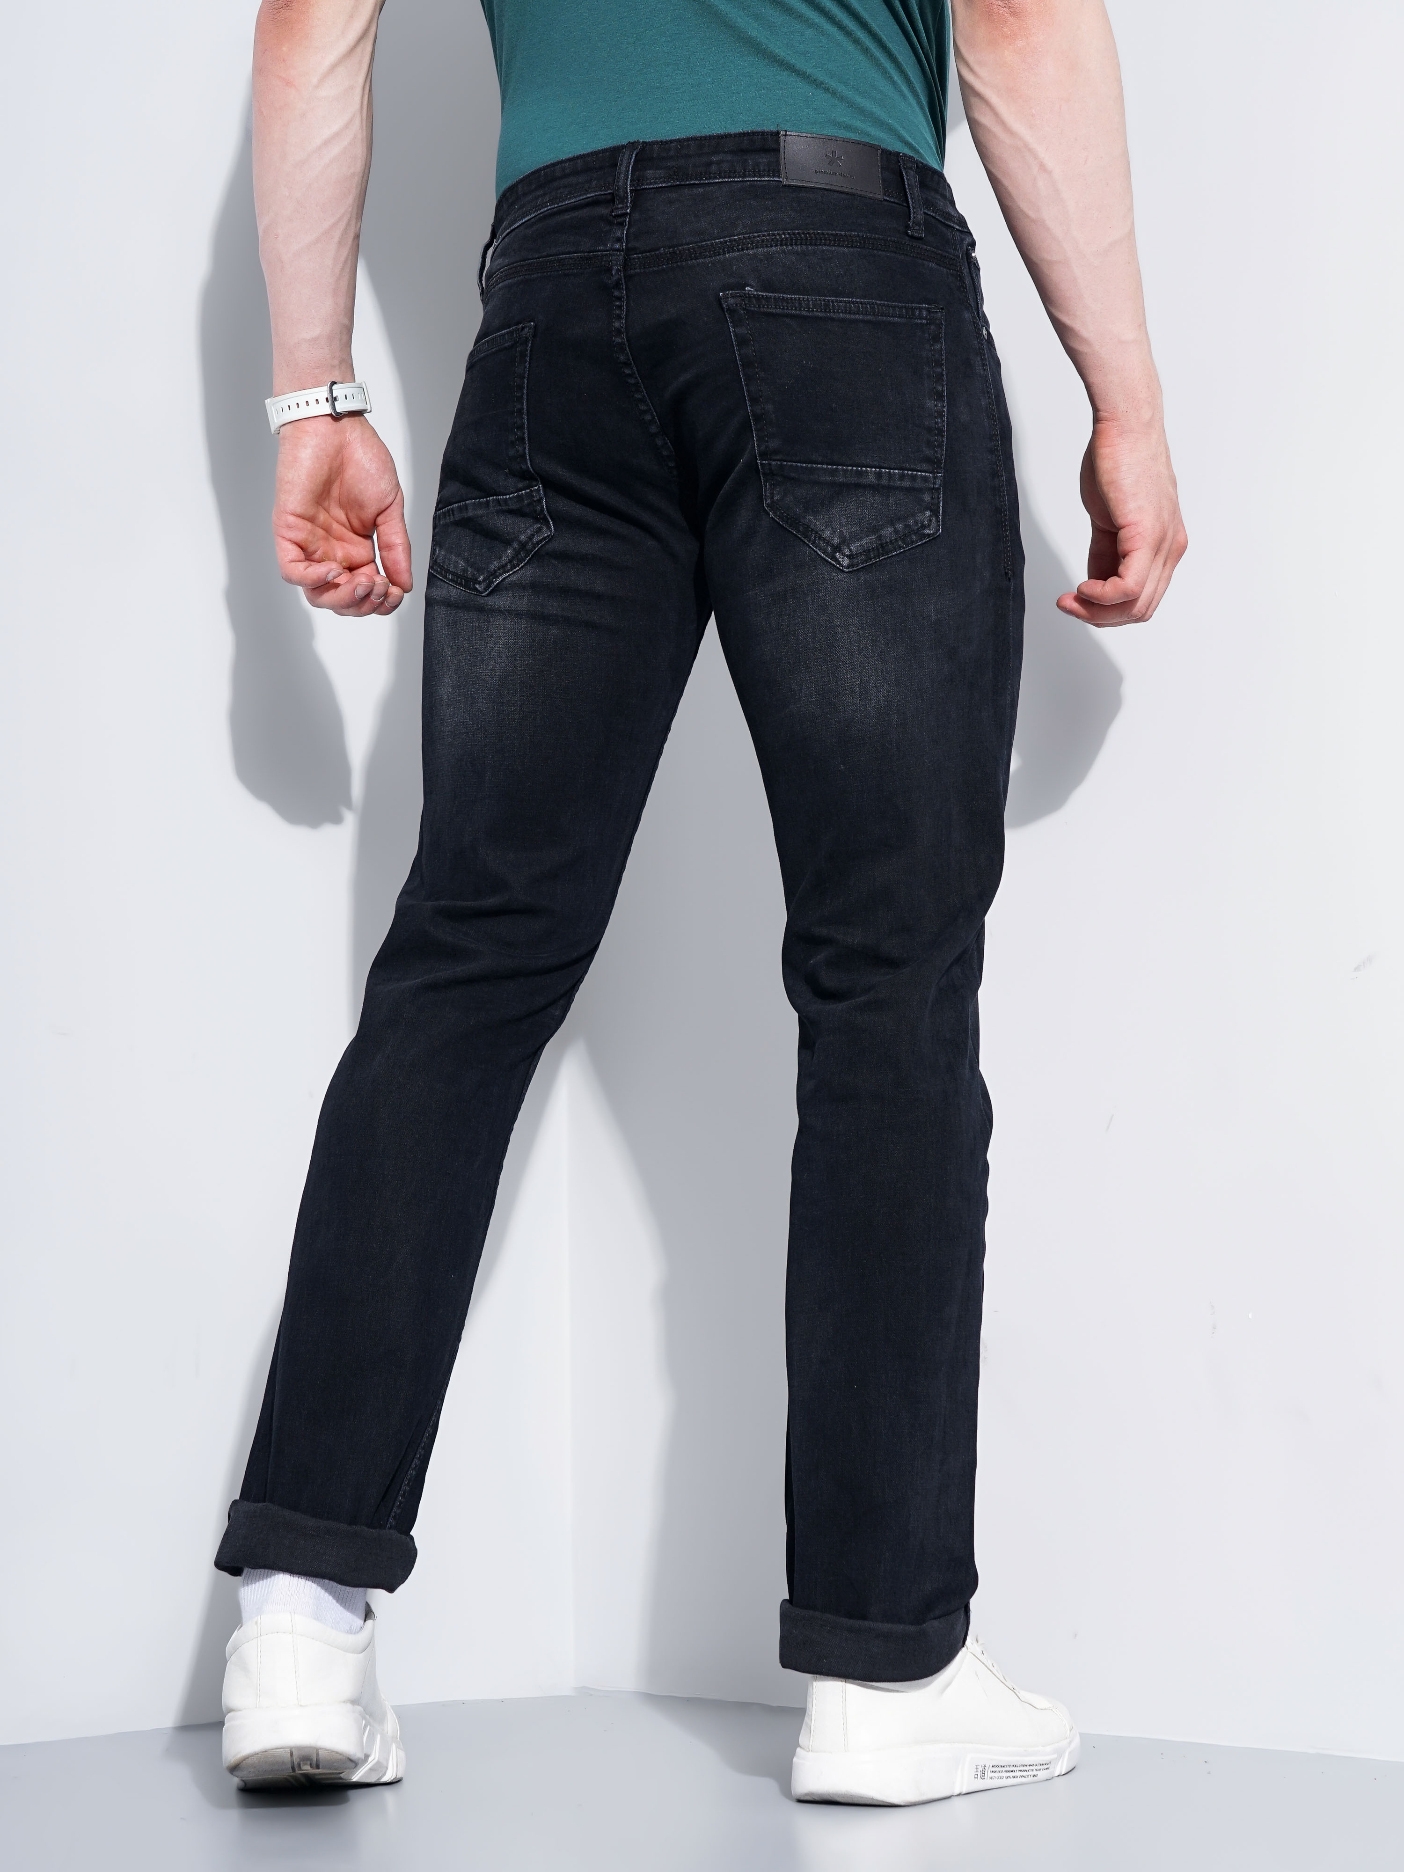 Sugar Cane Type III Black Denim Jeans - Slim